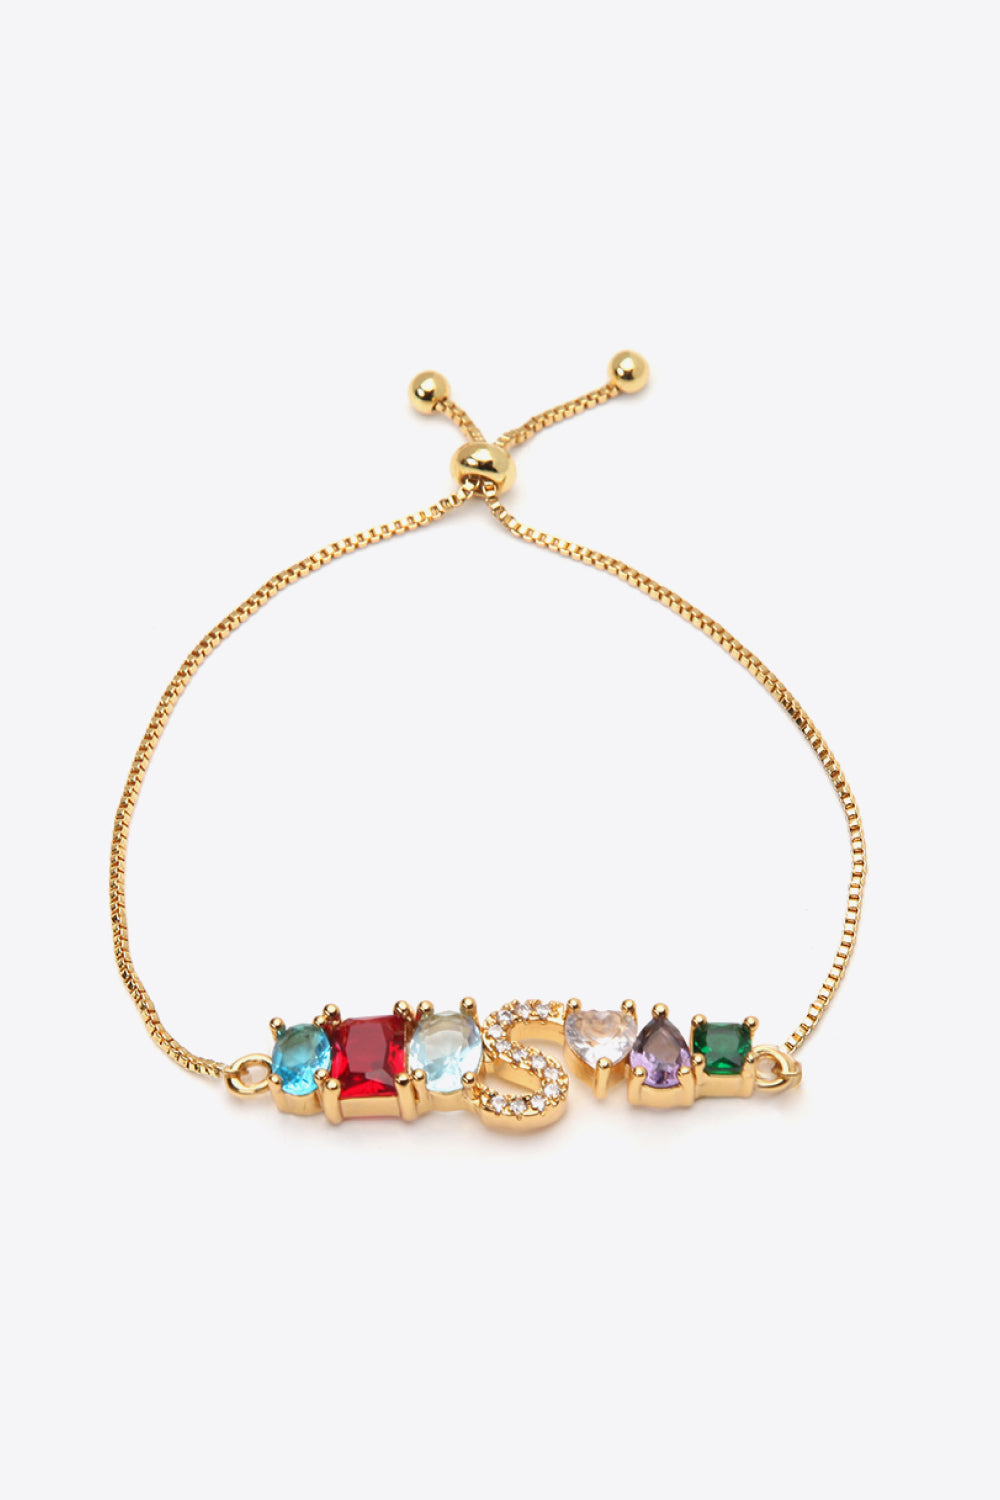 K to T Zircon Bracelet - S / One Size - Women’s Jewelry - Bracelets - 25 - 2024